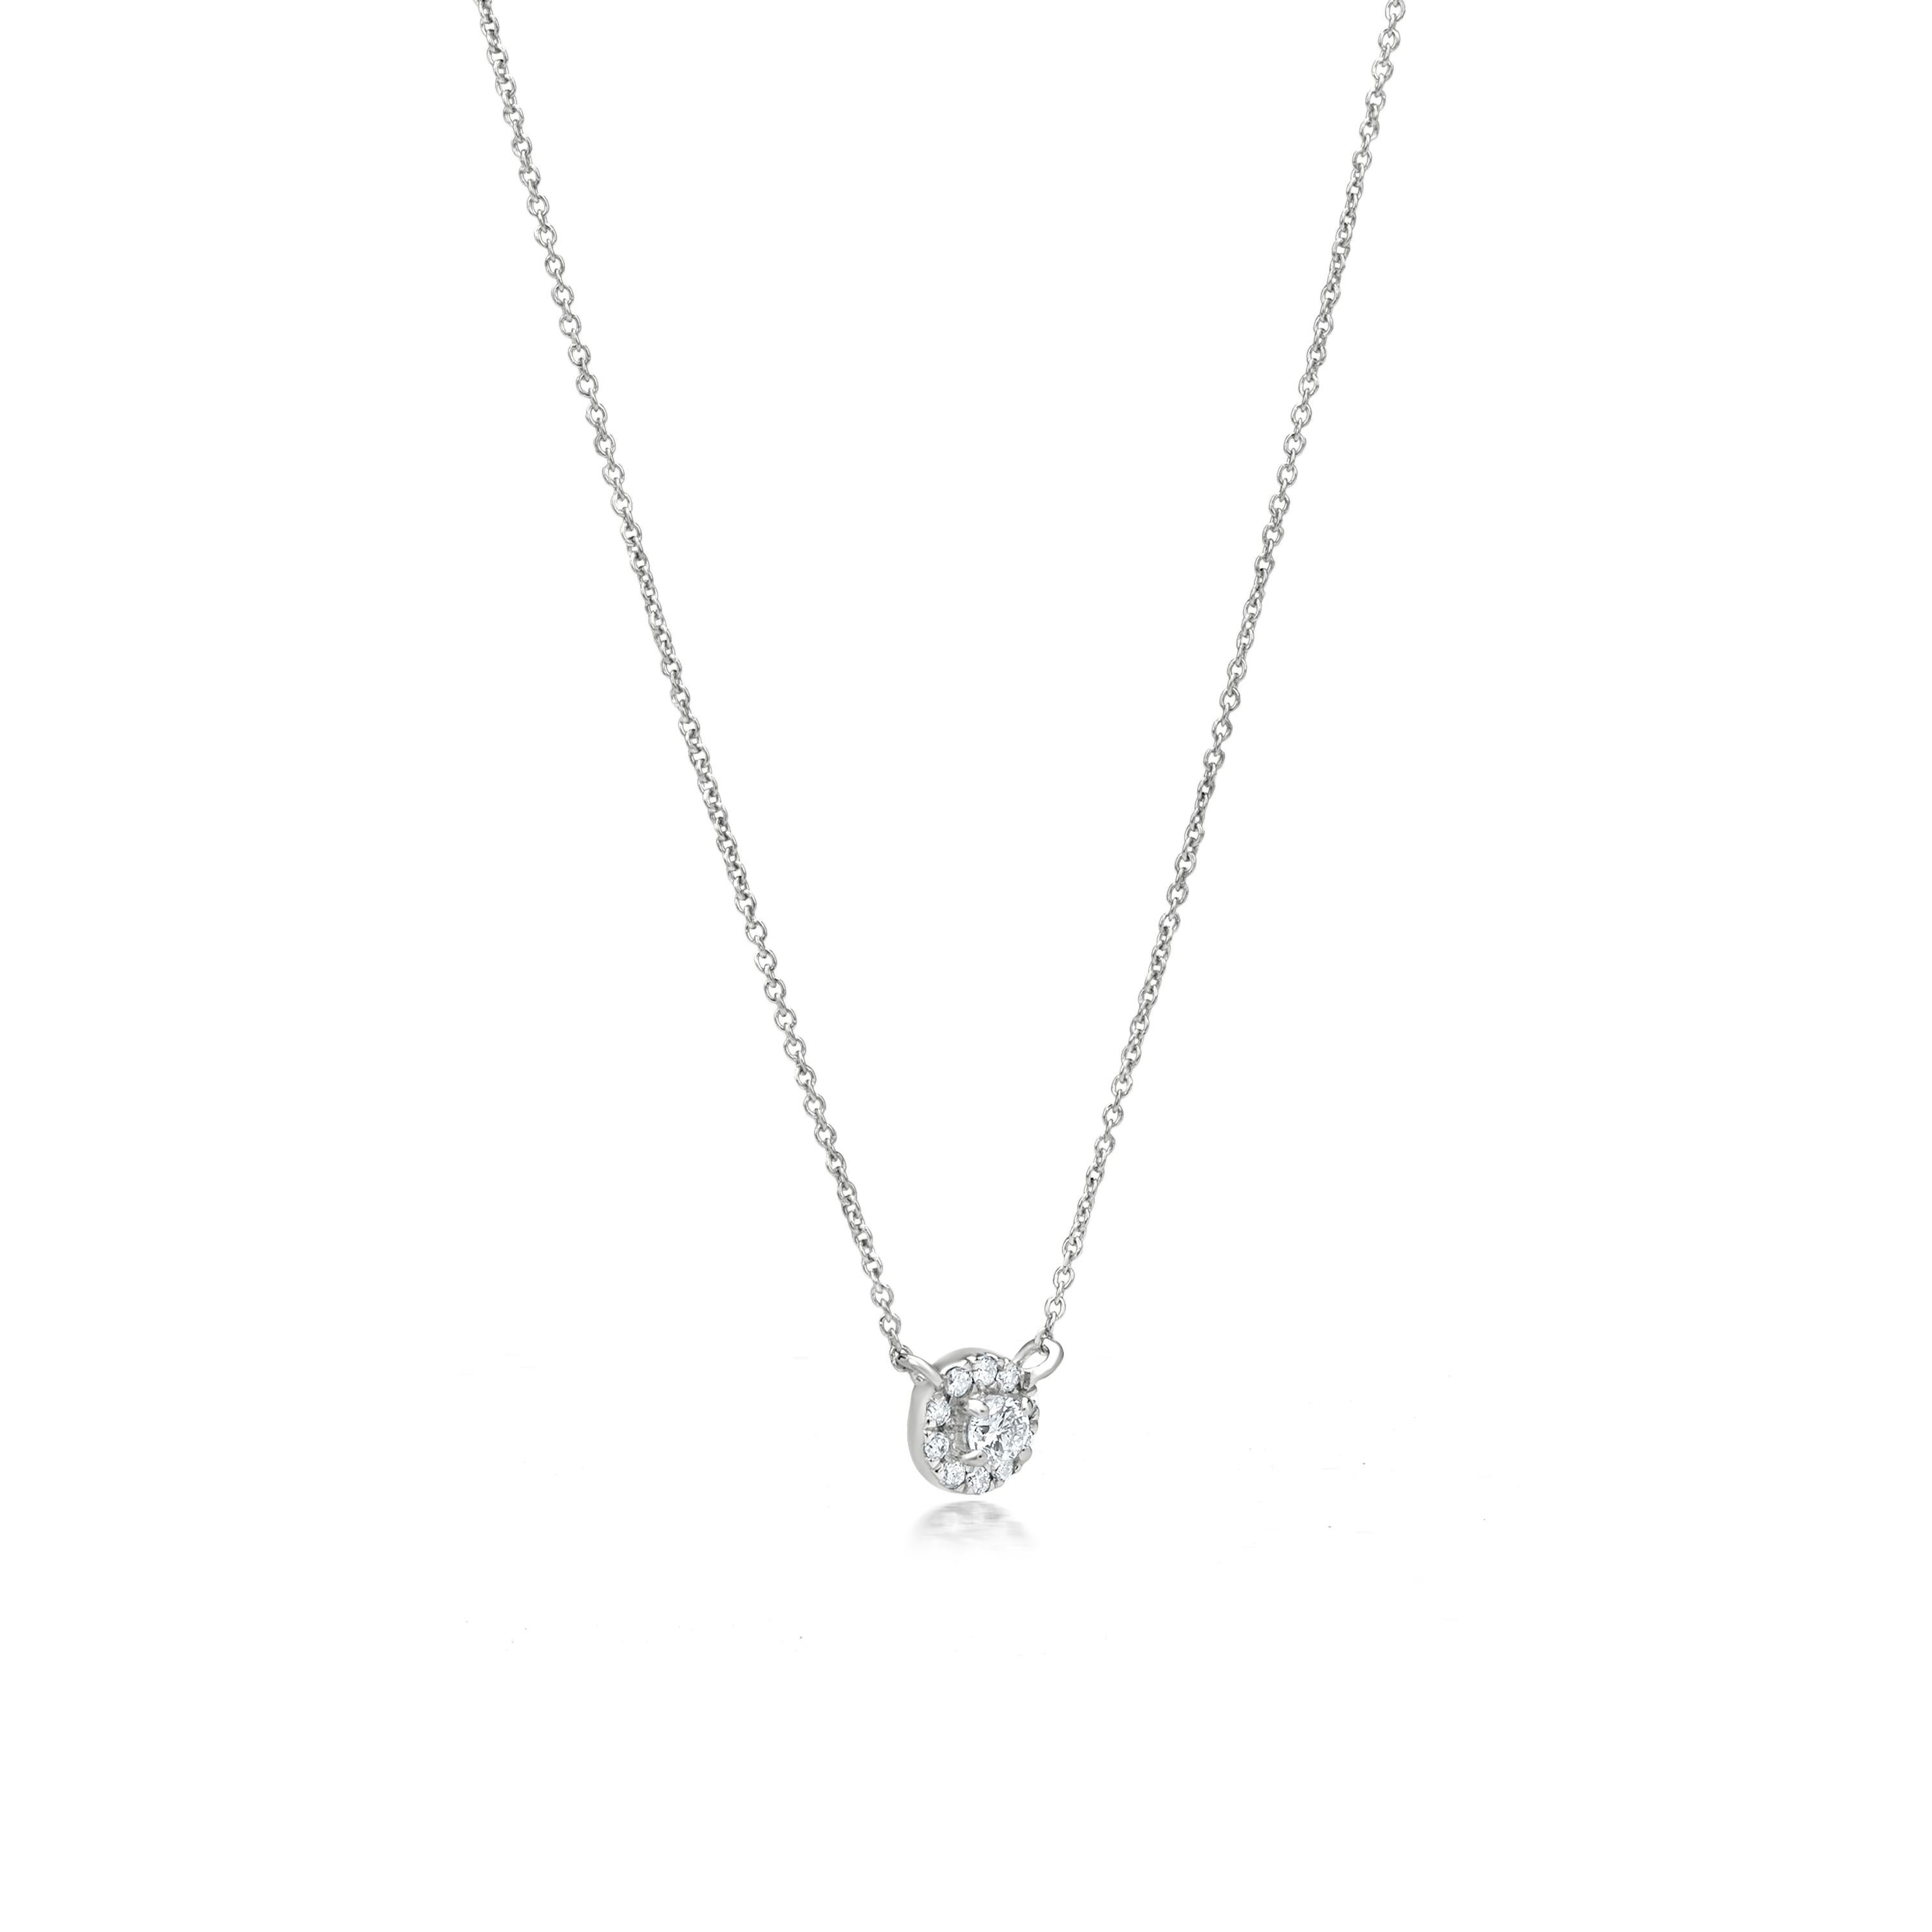 Round Cut Luxle Circle Diamond Pendant Necklace in 18k White Gold